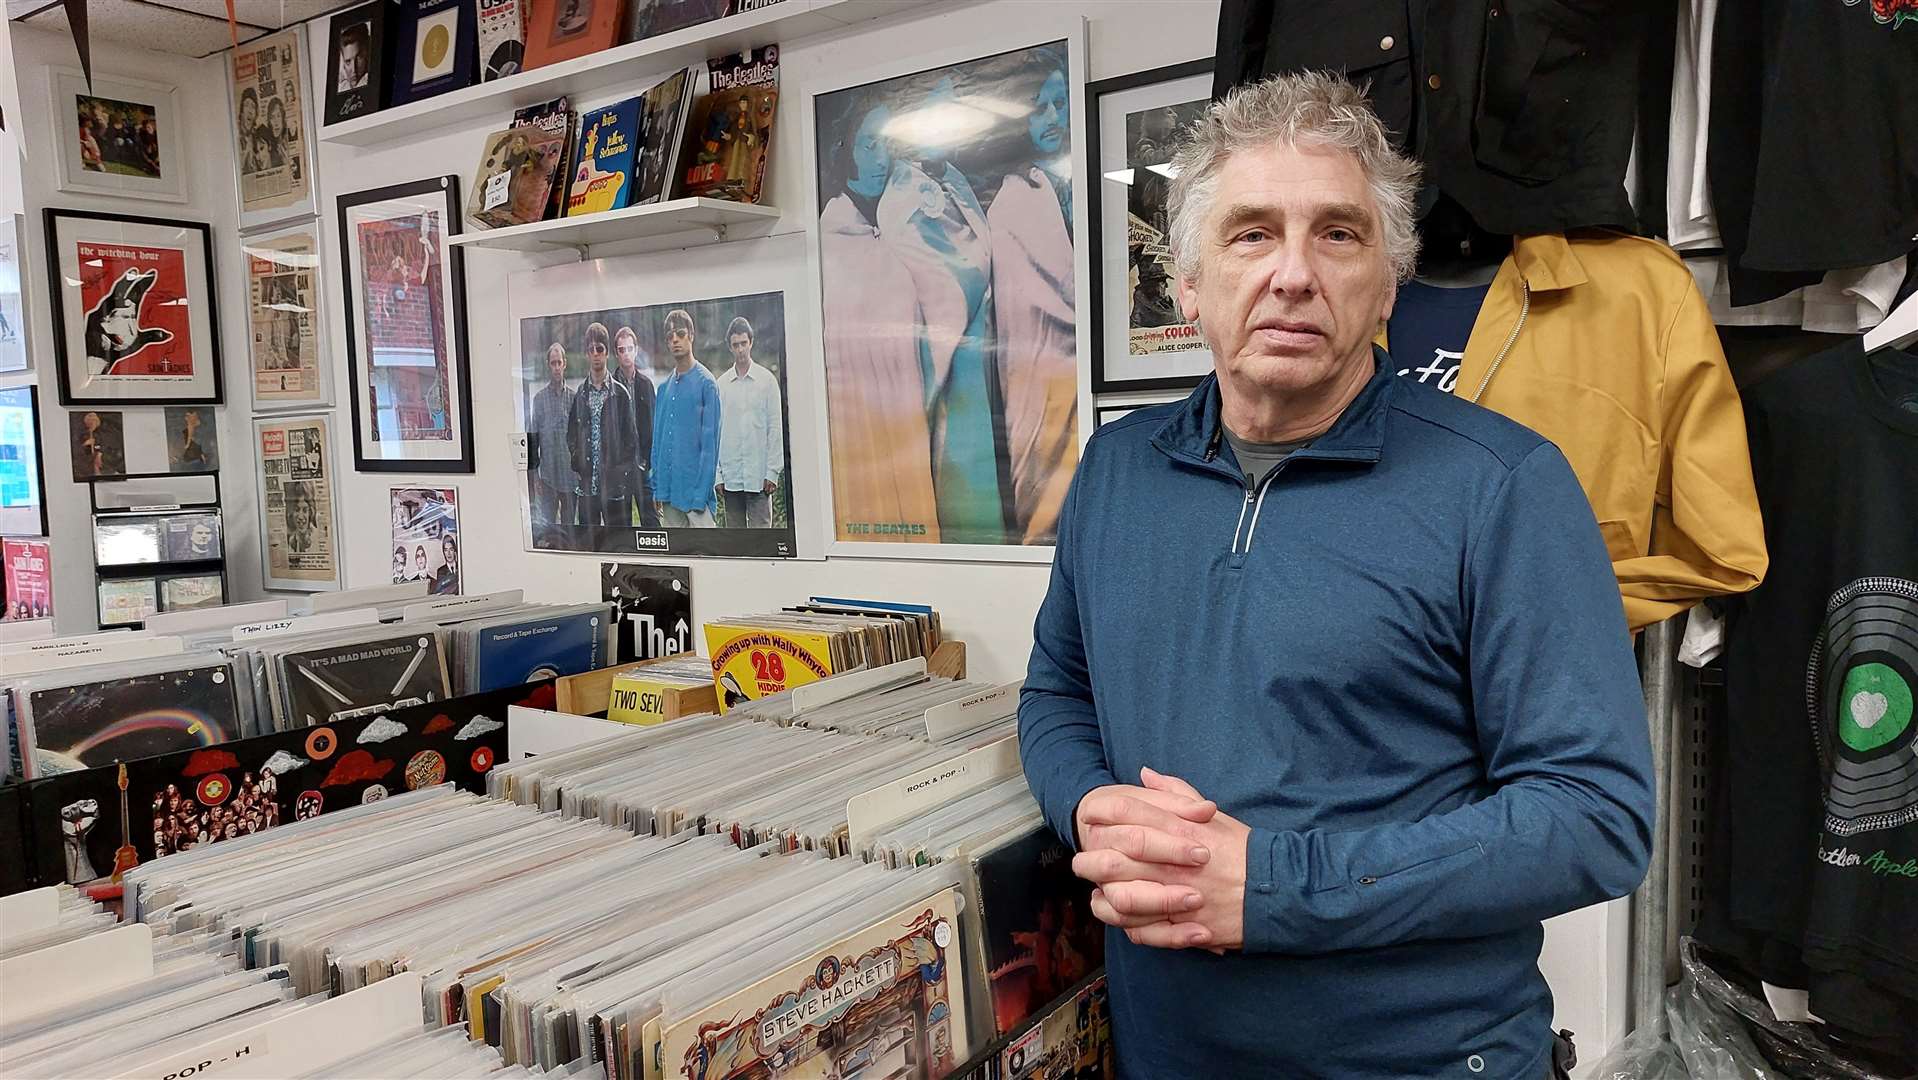 Vince Monticelli runs The Record Store